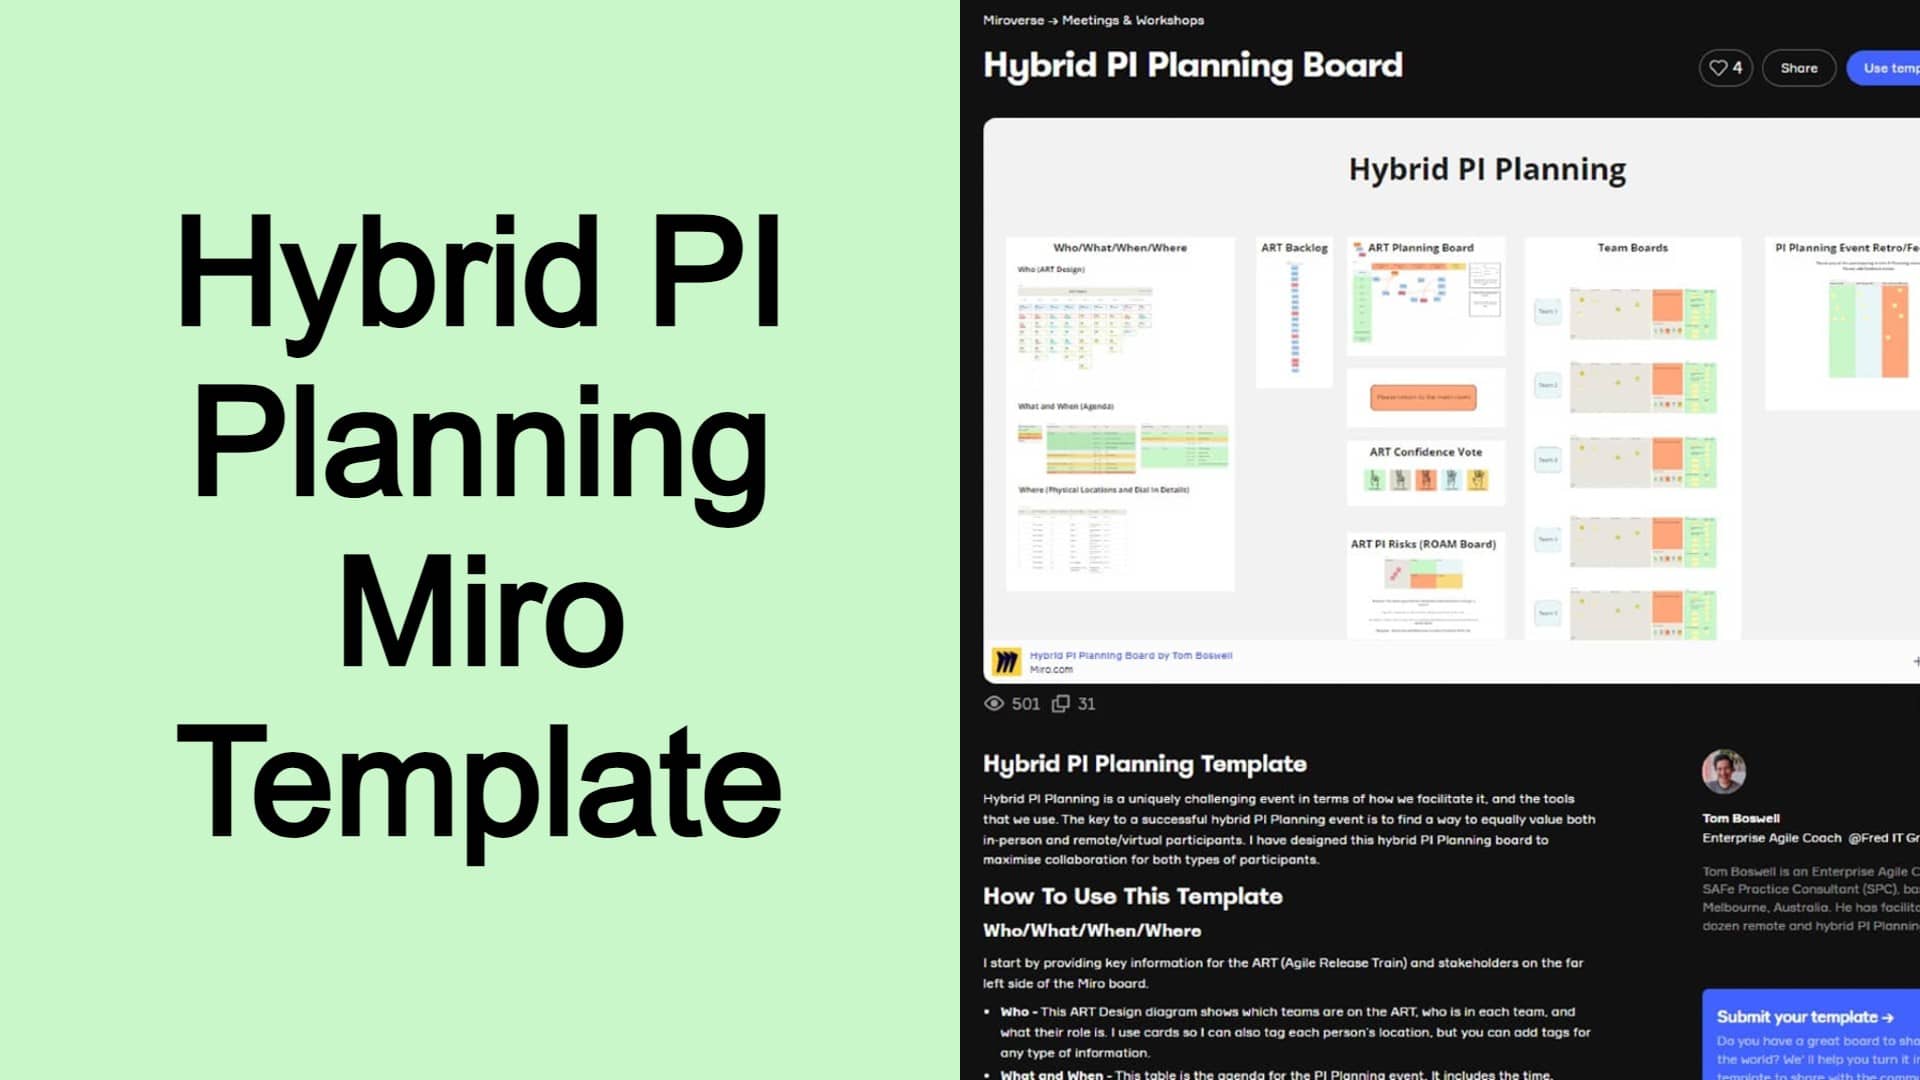 PI Planning template Link